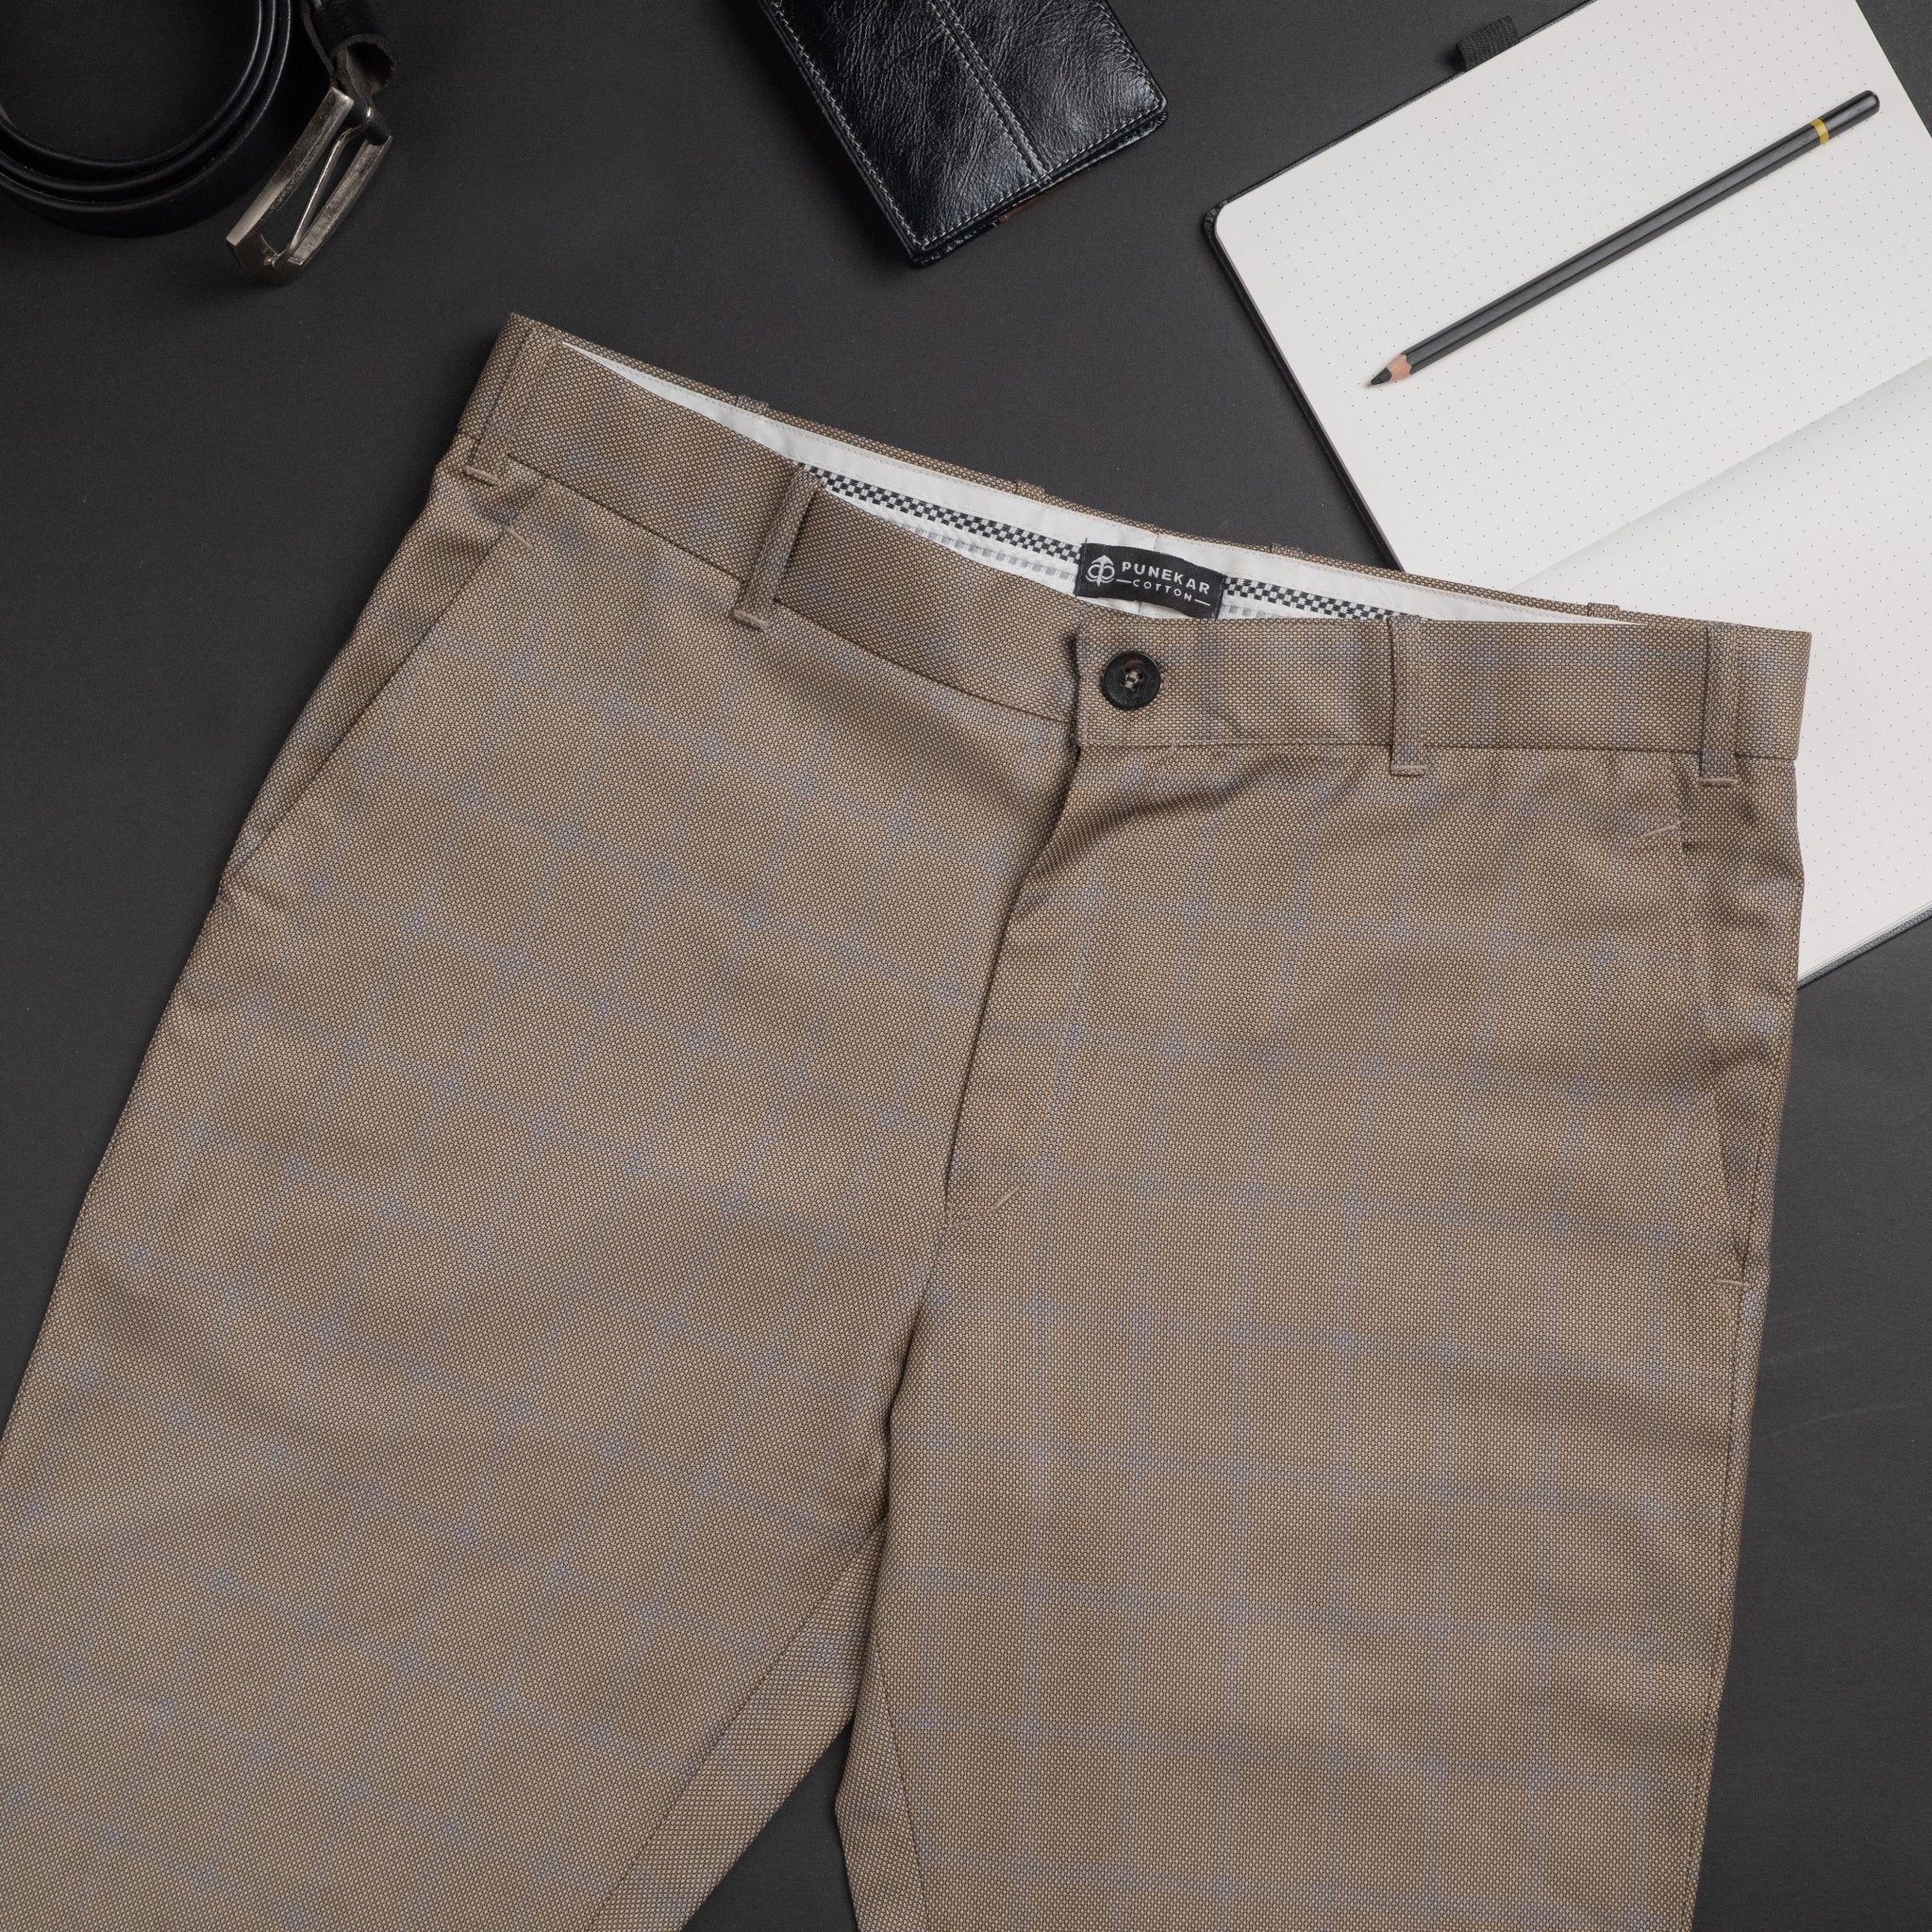 Formal Trouser: Buy Men Navy Blue Cotton Formal Trouser Online - Cliths.com